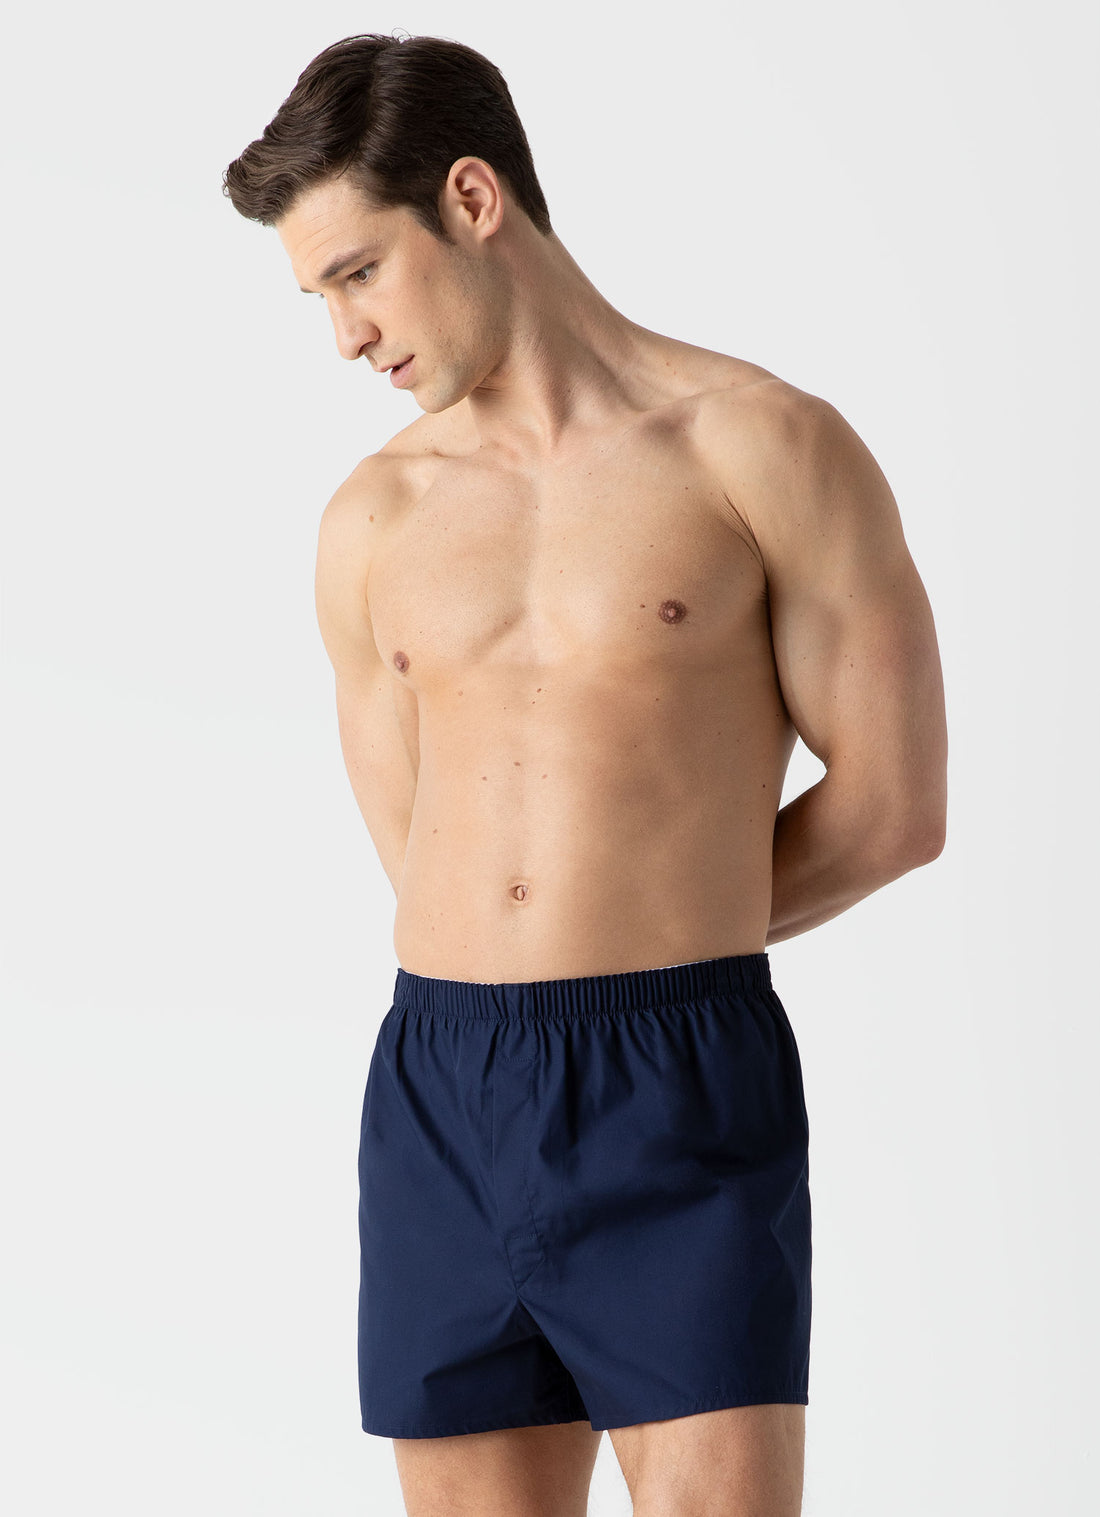 LuxuryS Printing DesignerS Mens Boxers Underwear  AB0LouisVuittonS Man Pure Color Underpants From Pisabar,  $5.18